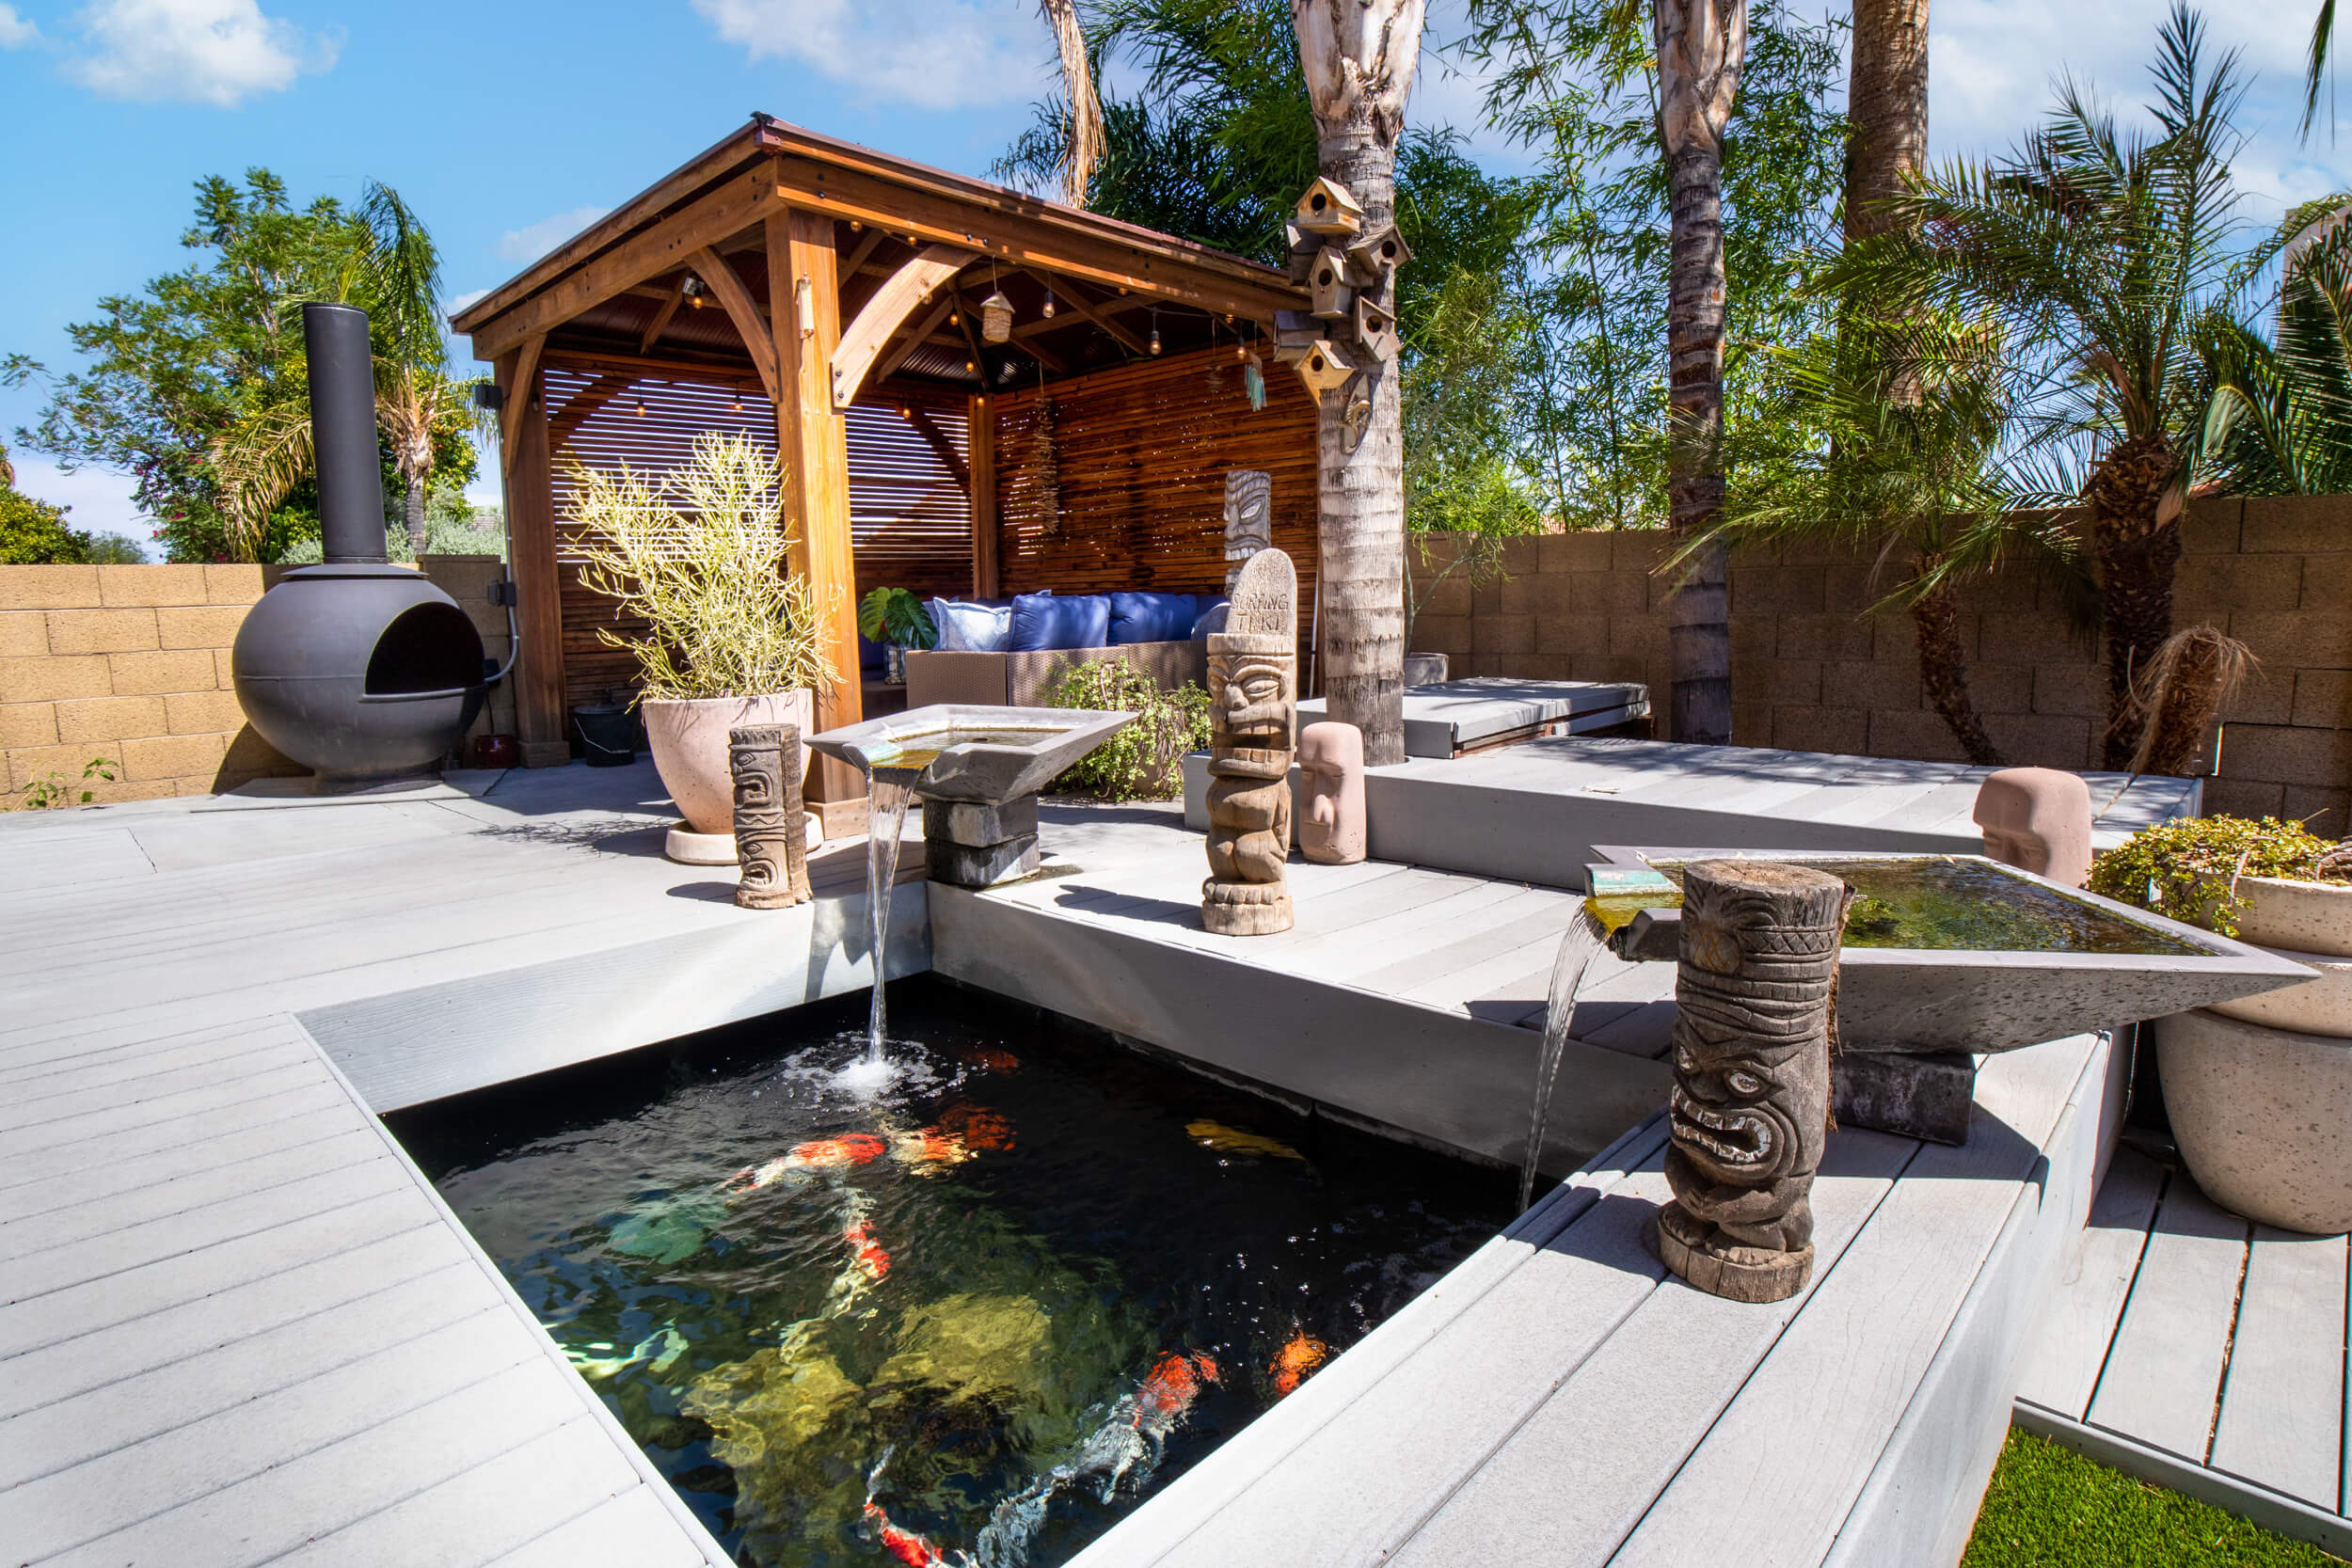 Backyard meditation area at mens transitional living home, Scottsdale AZ.